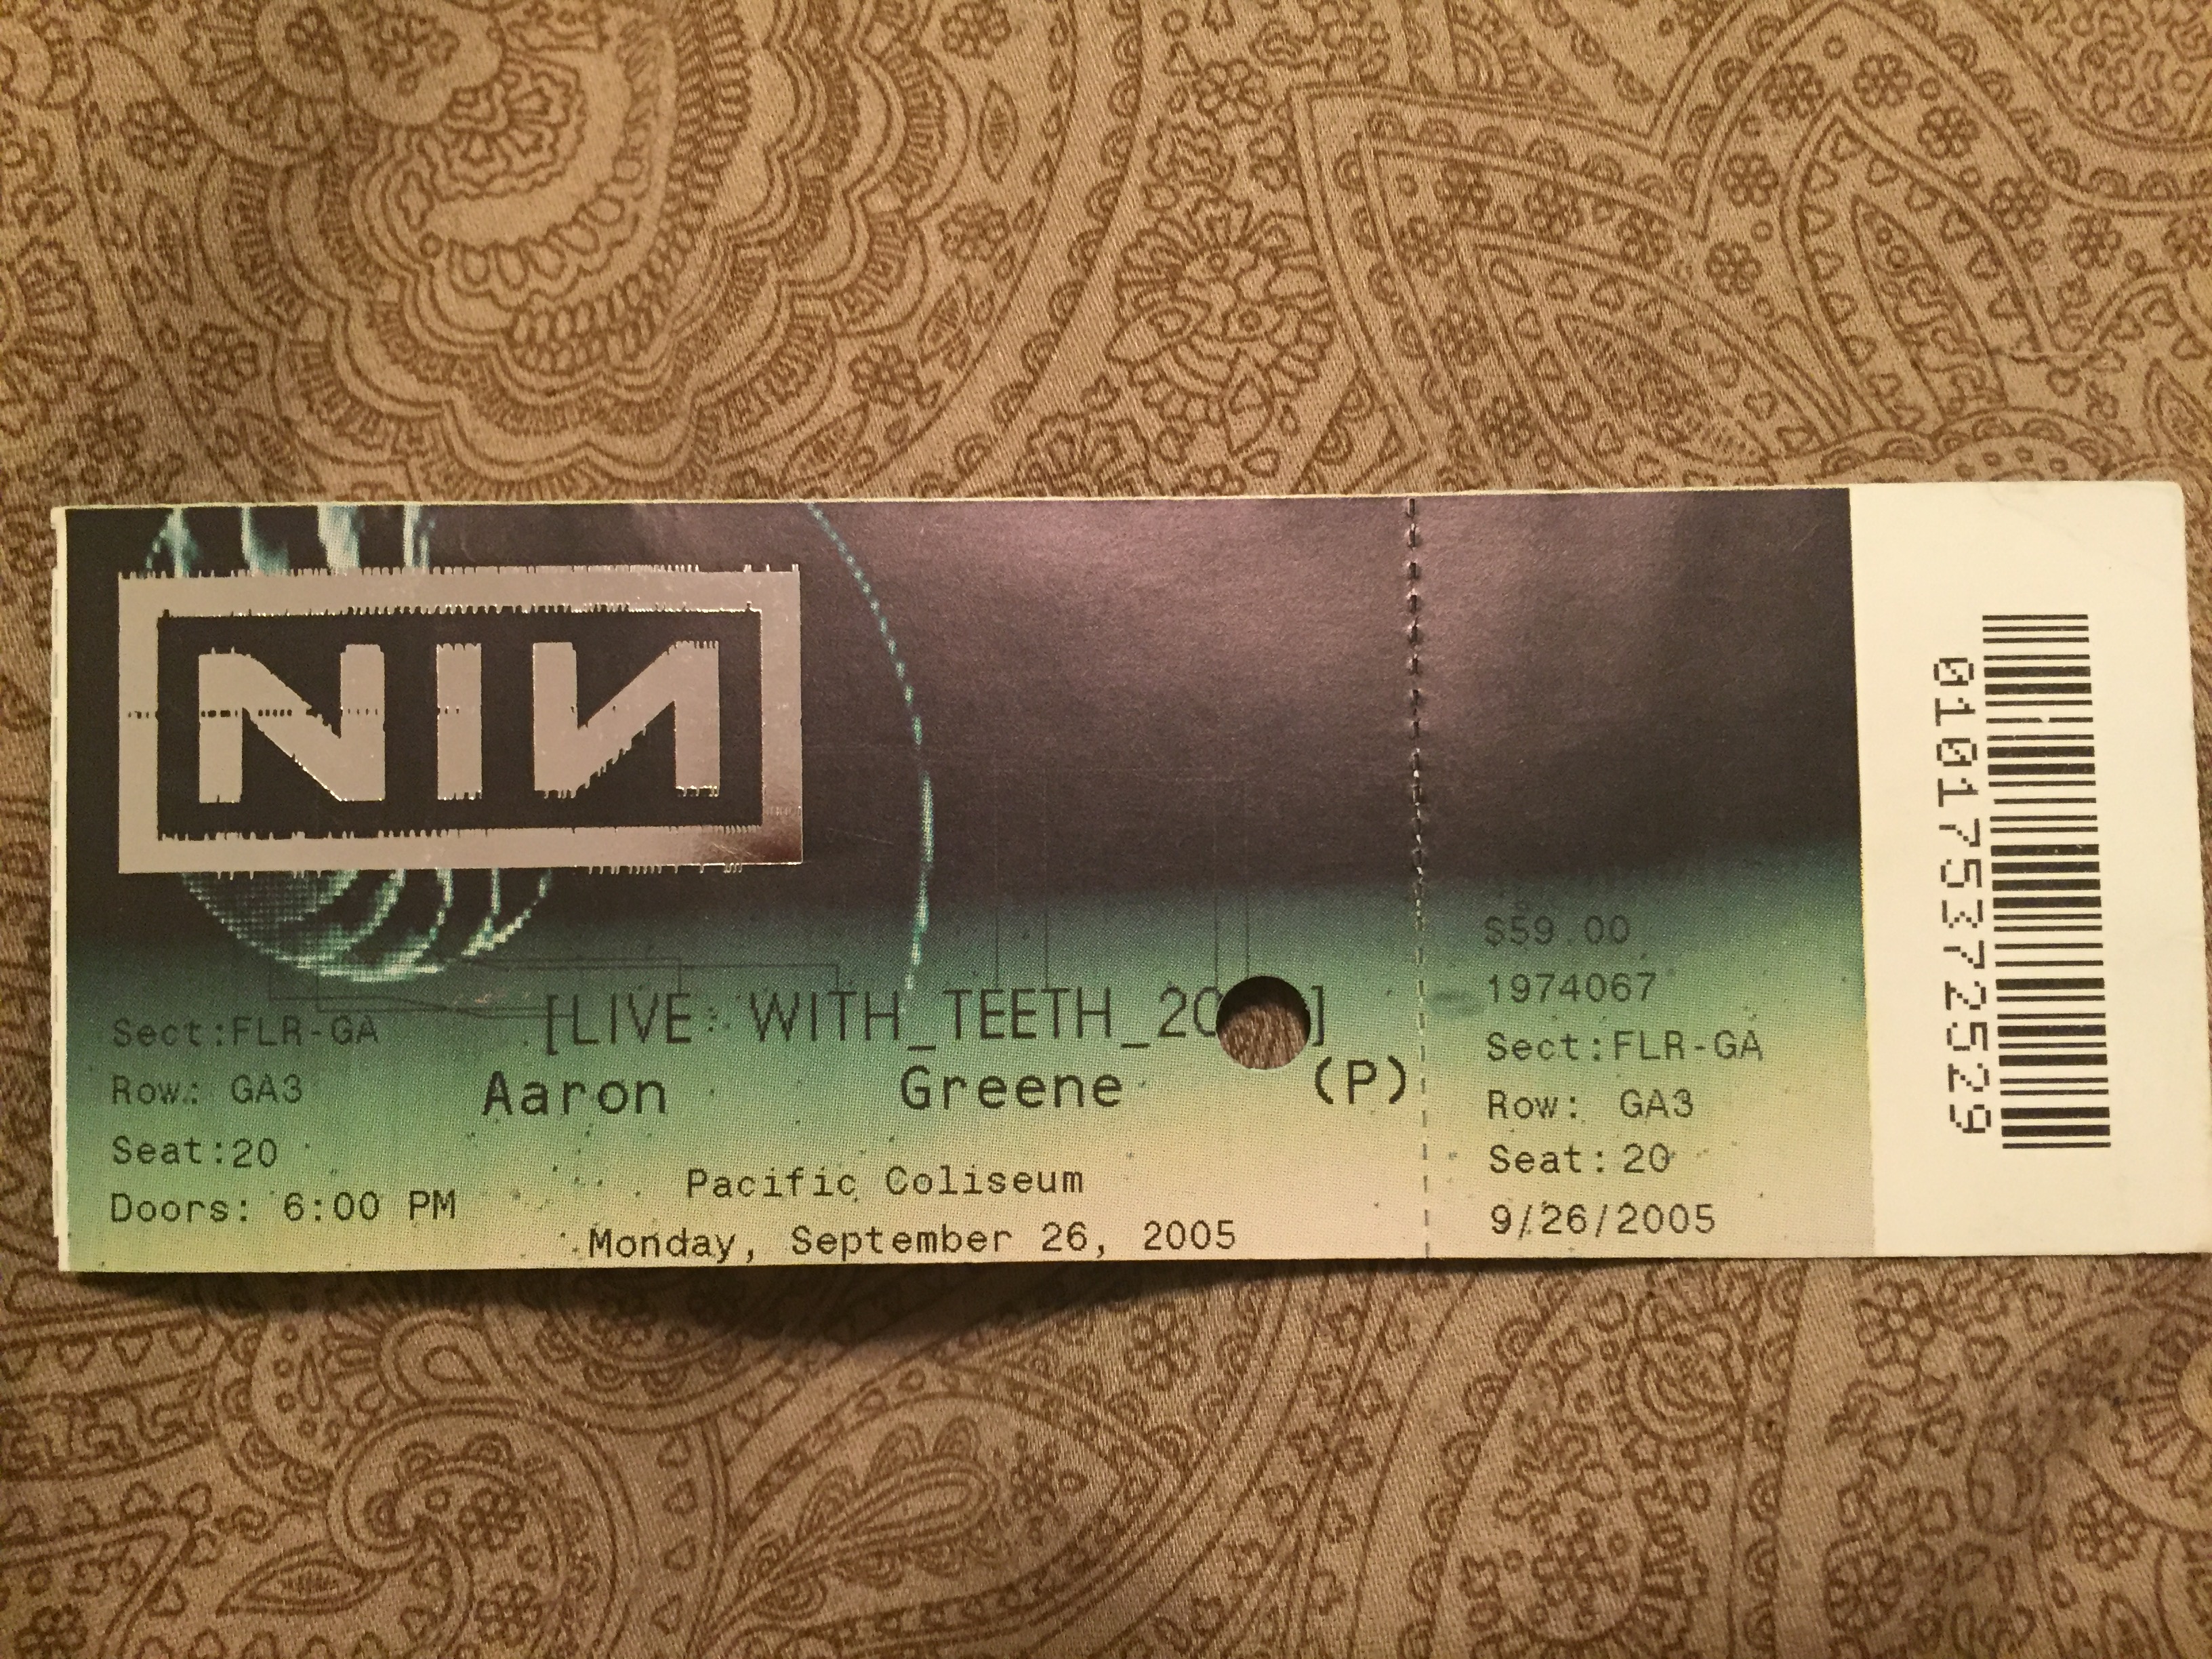 2005/09/26 Ticket